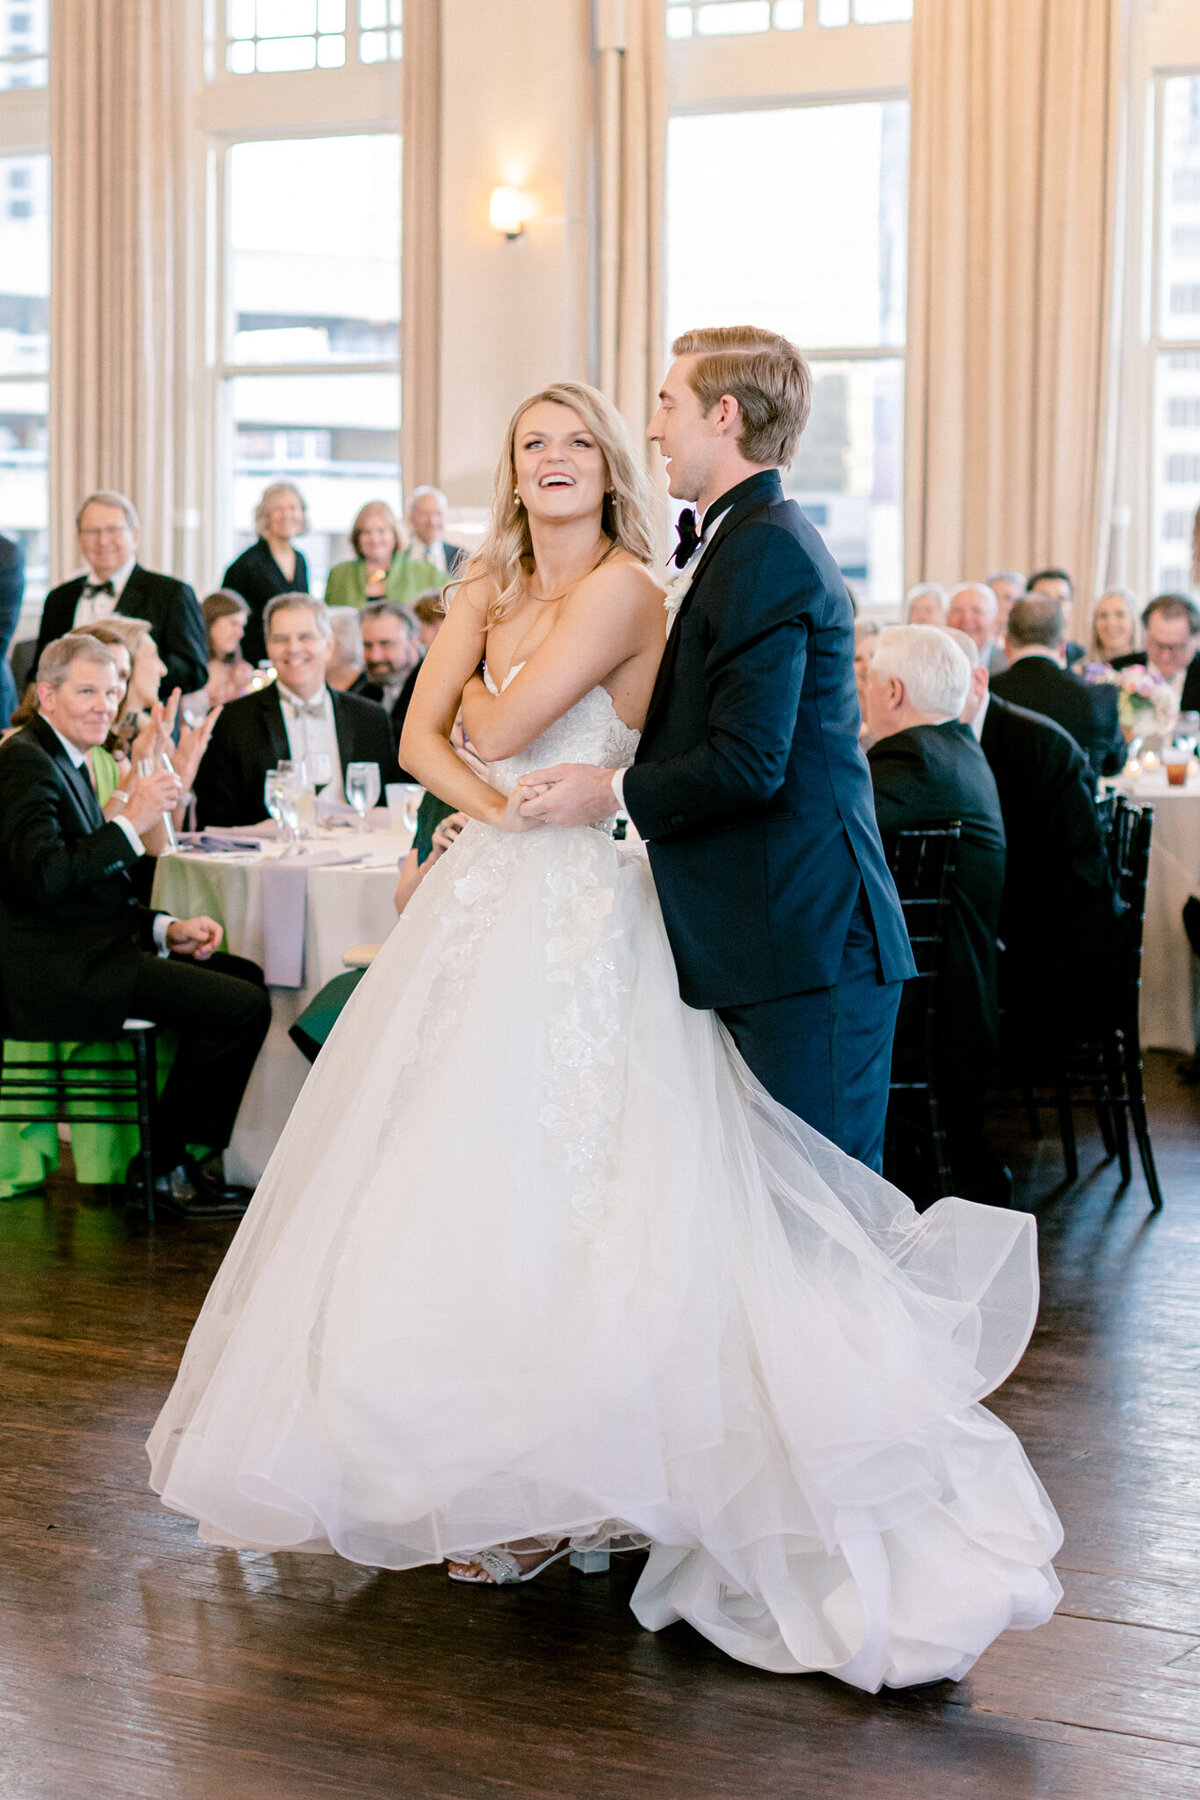 Shelby & Thomas's Wedding at HPUMC The Room on Main | Dallas Wedding Photographer | Sami Kathryn Photography-191